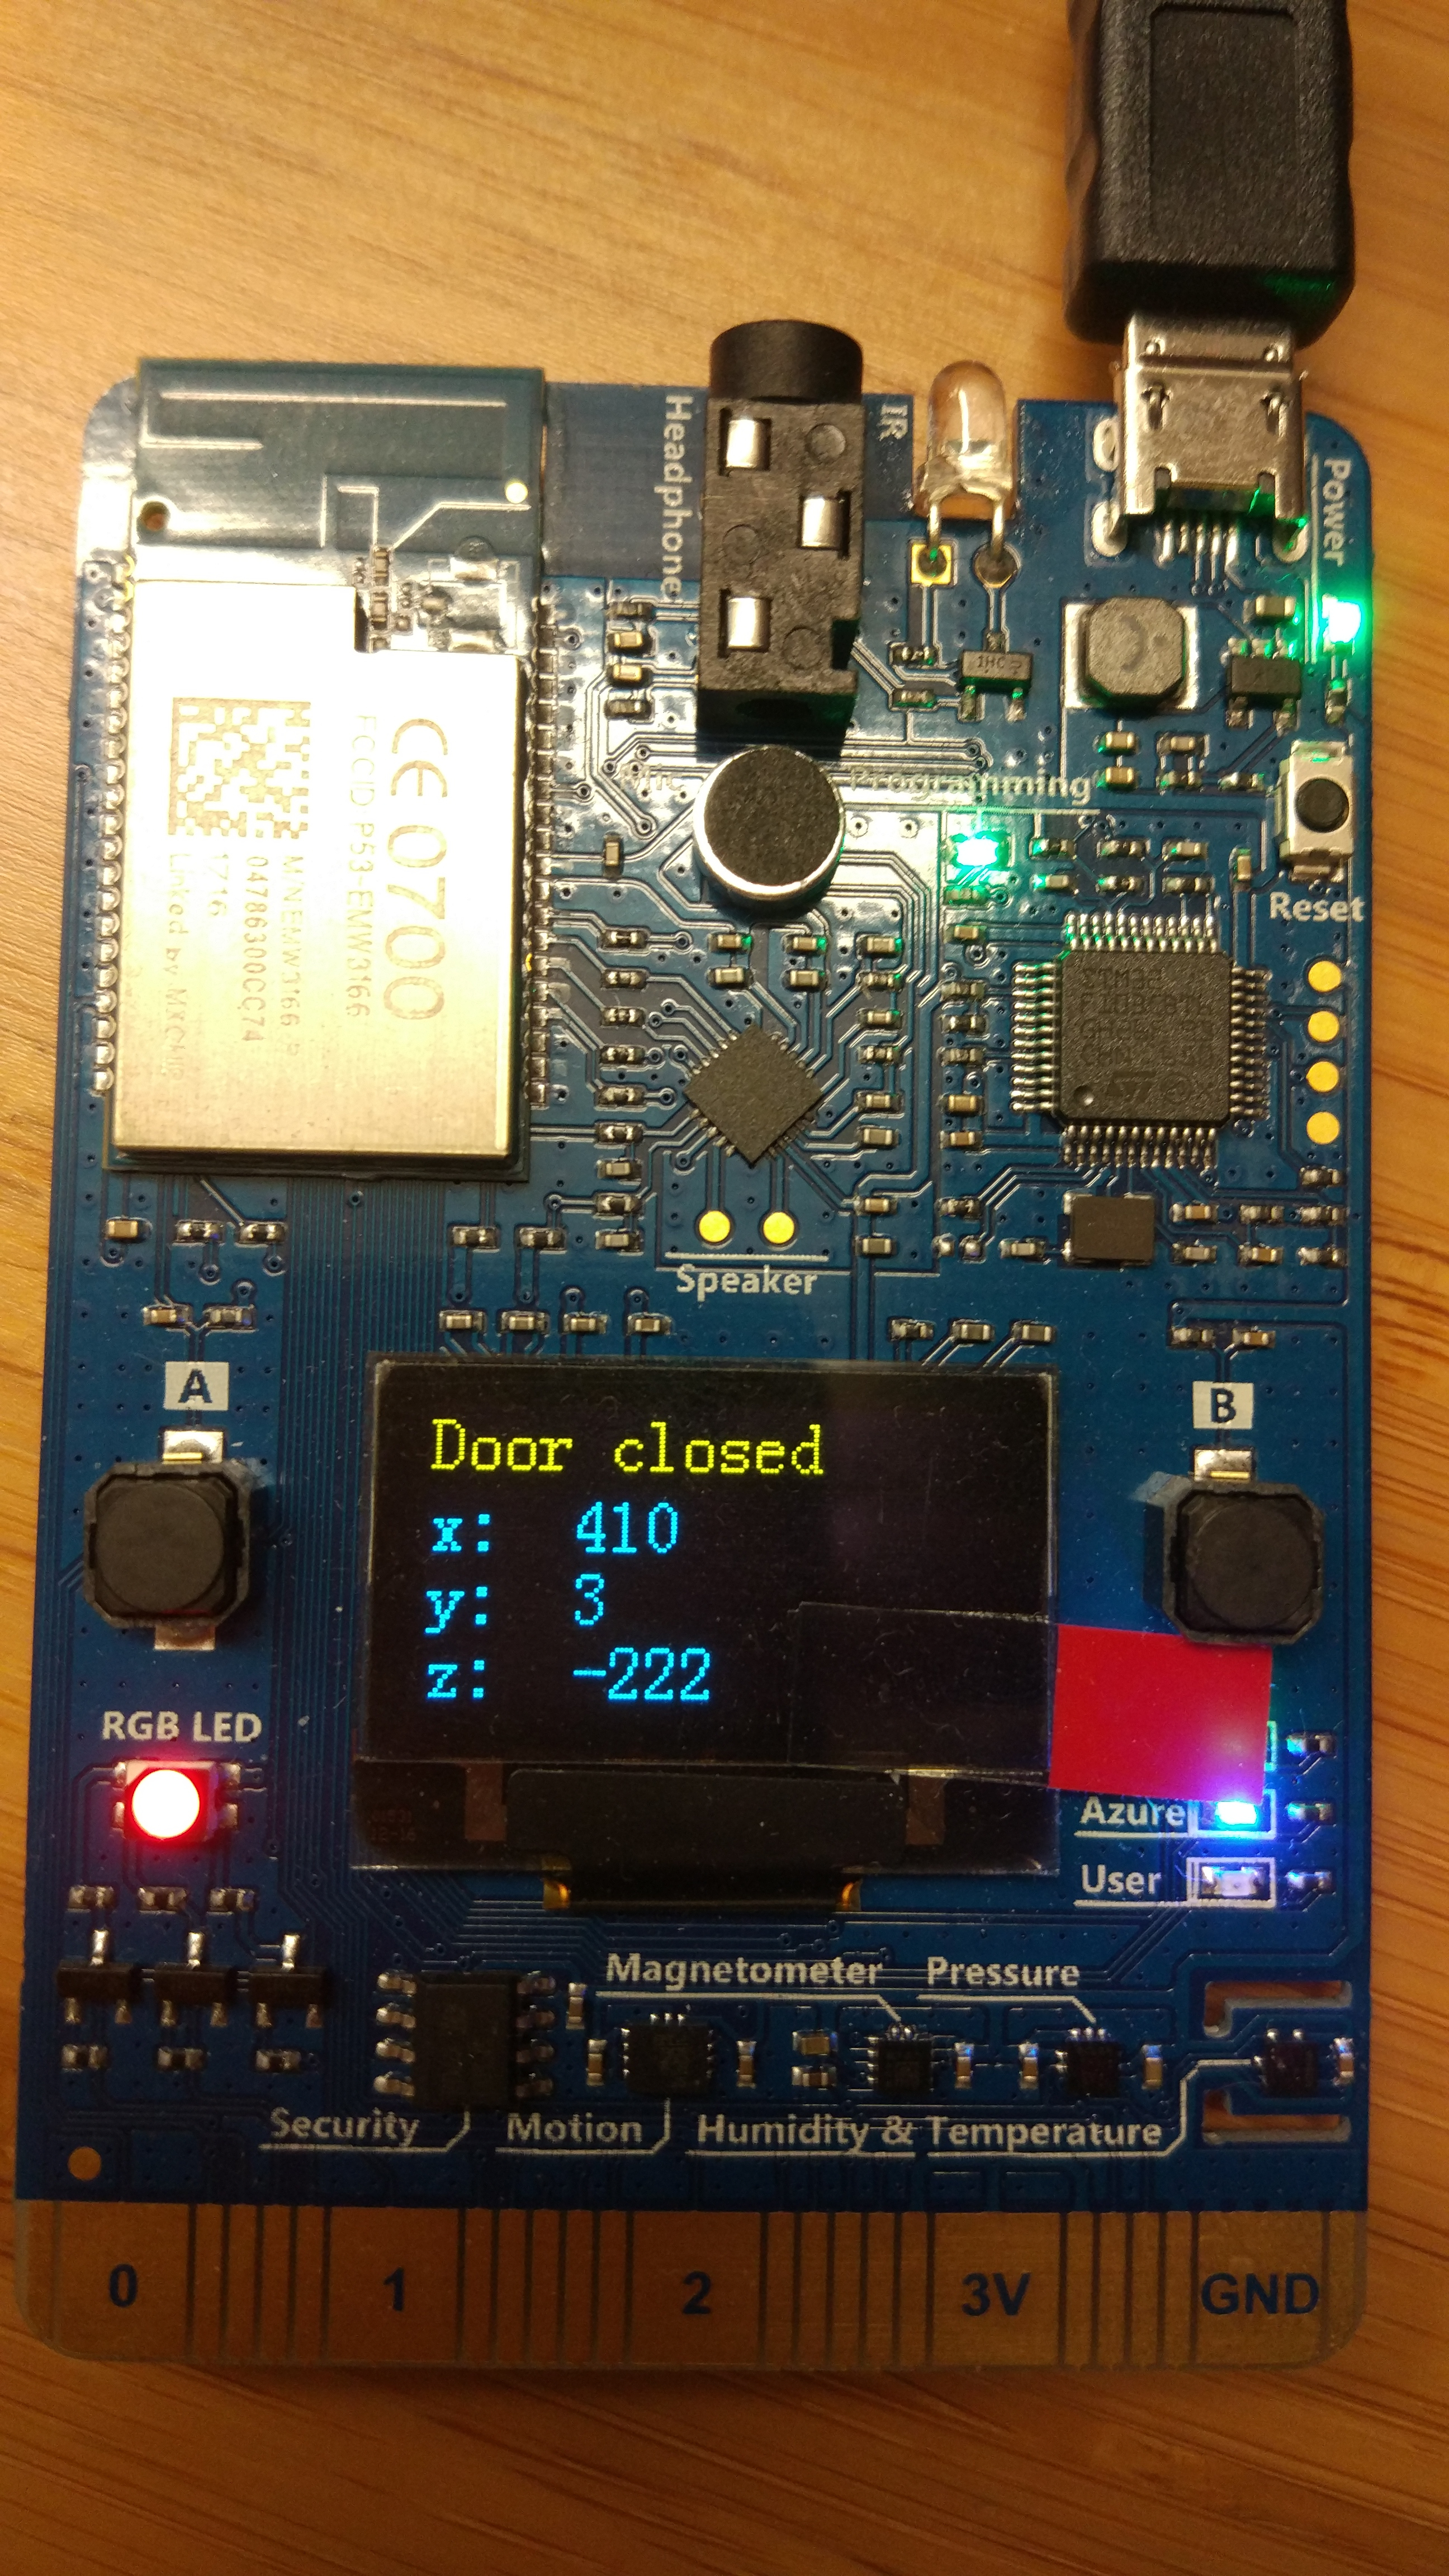 Magnets close to the sensor: Door Closed